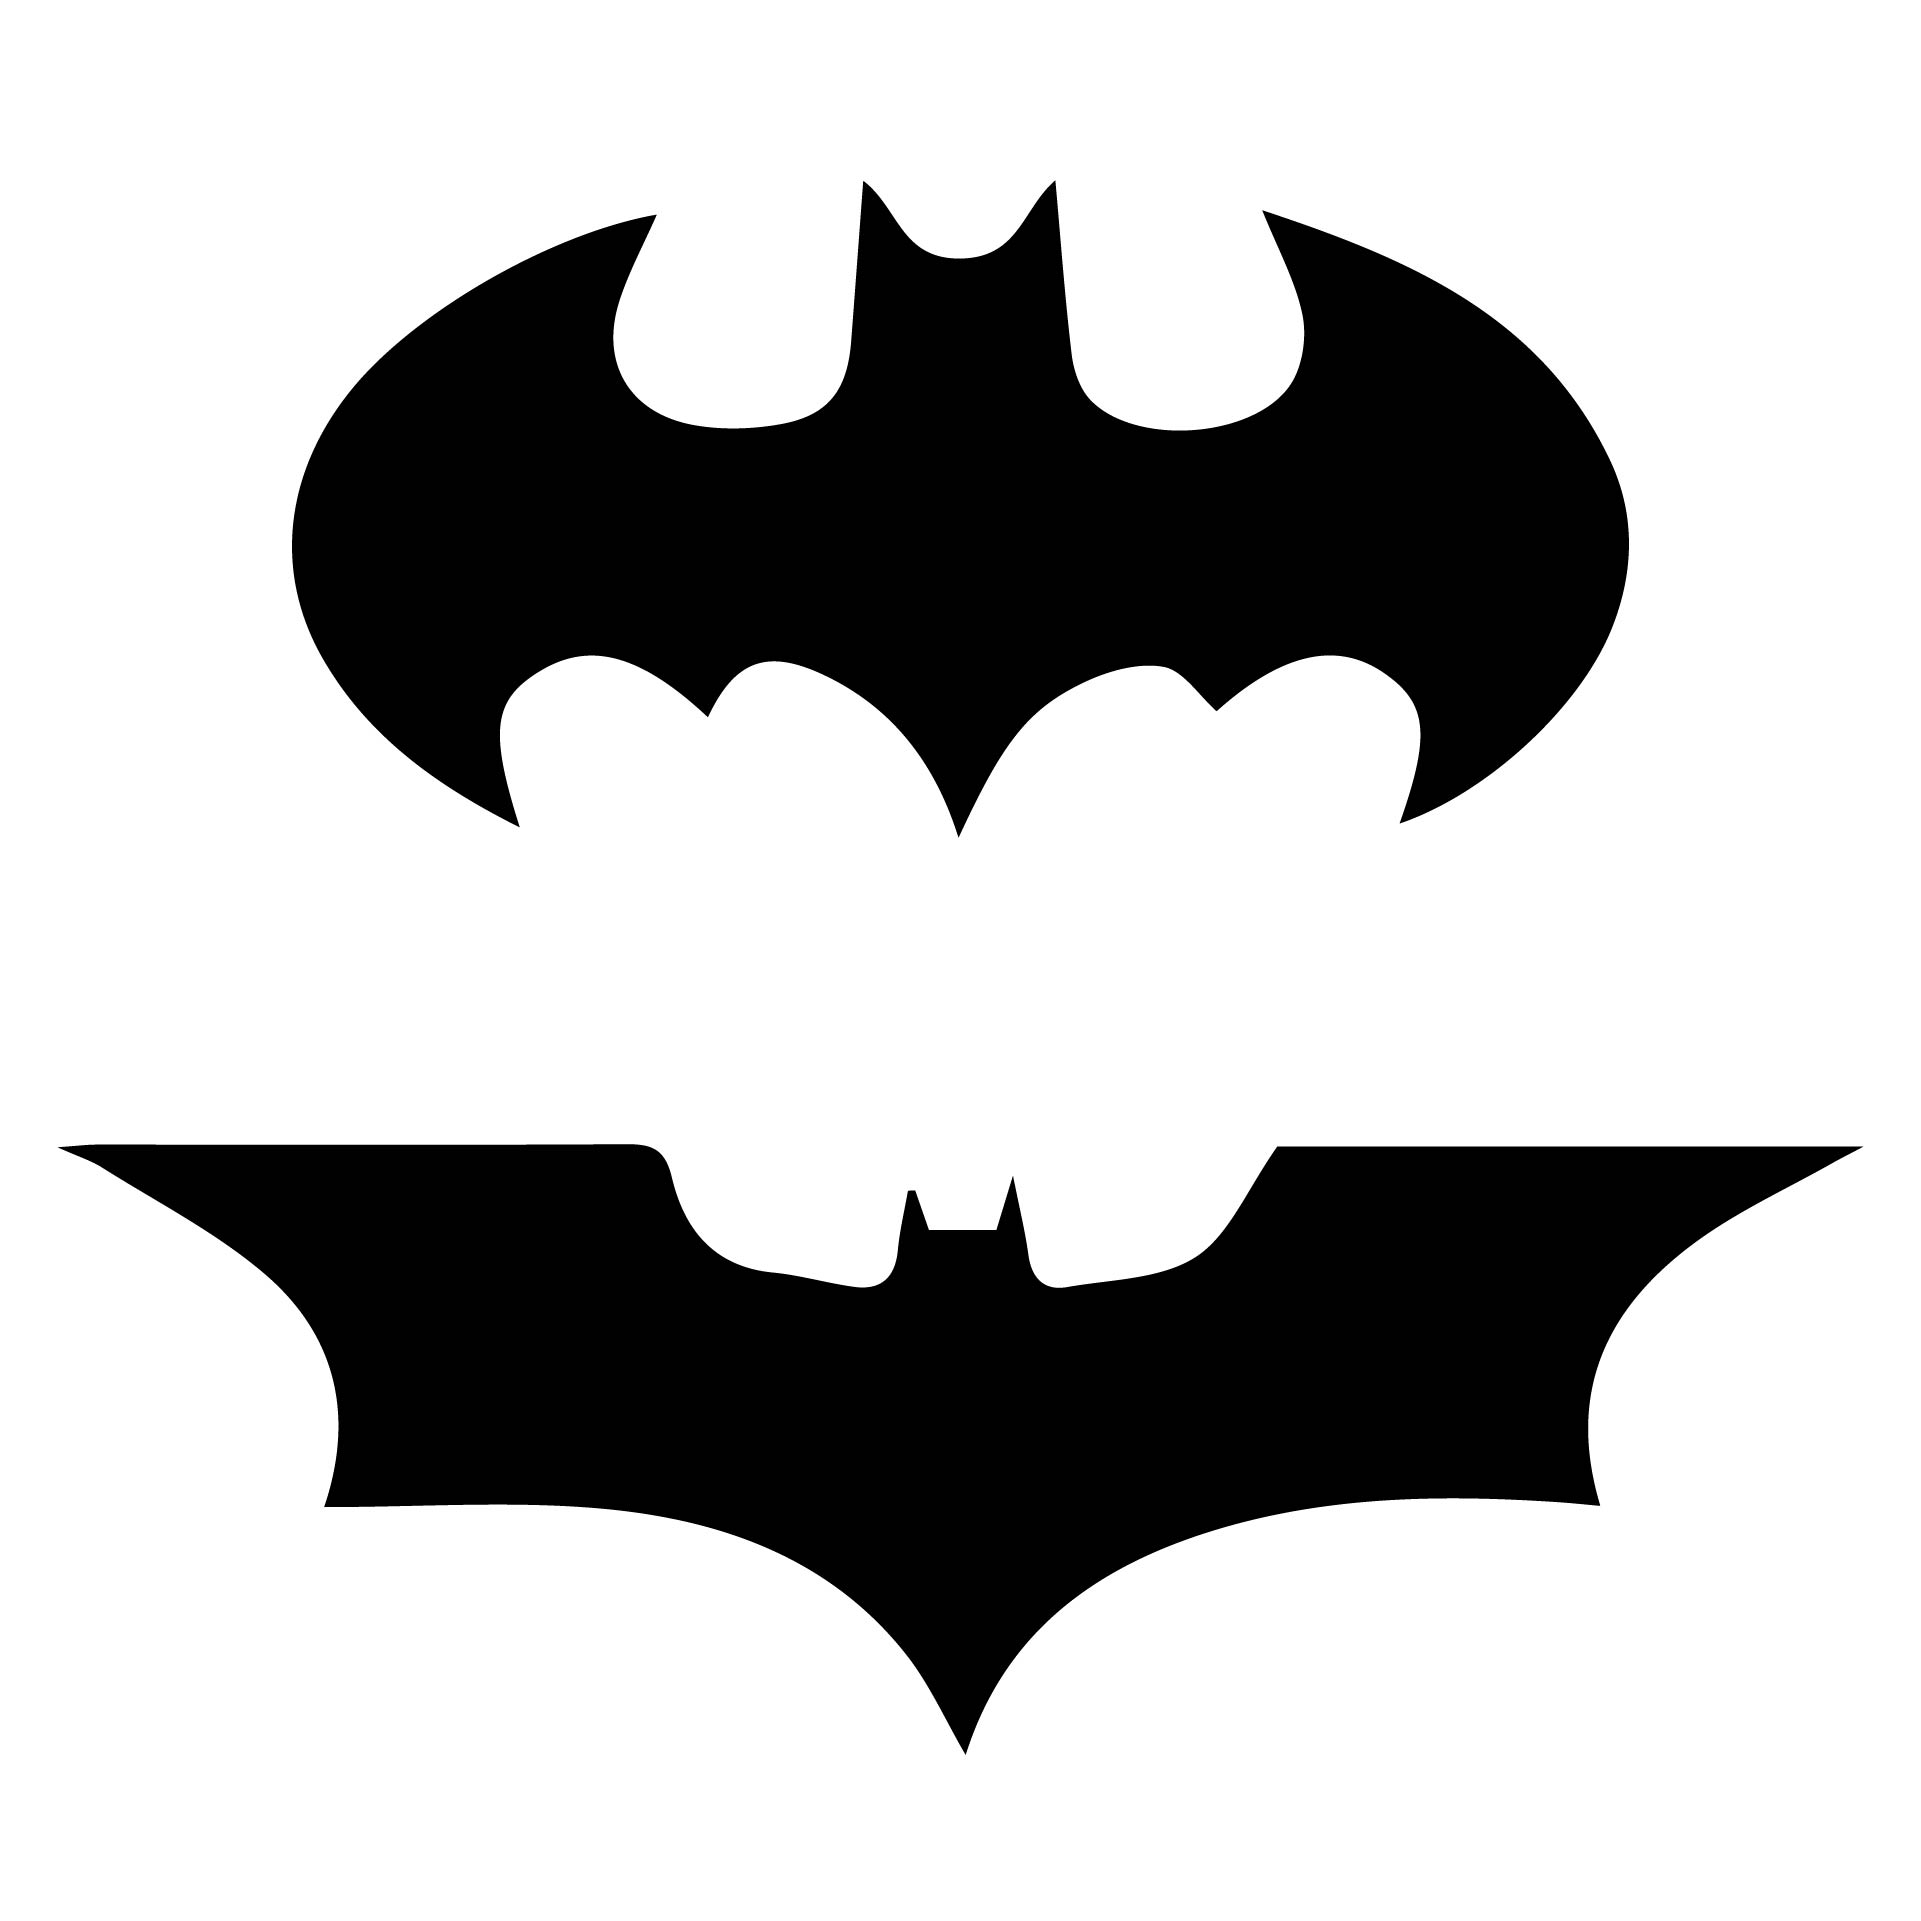 5 Best Images of Printable Batman Pumpkin Carving Templates Joker